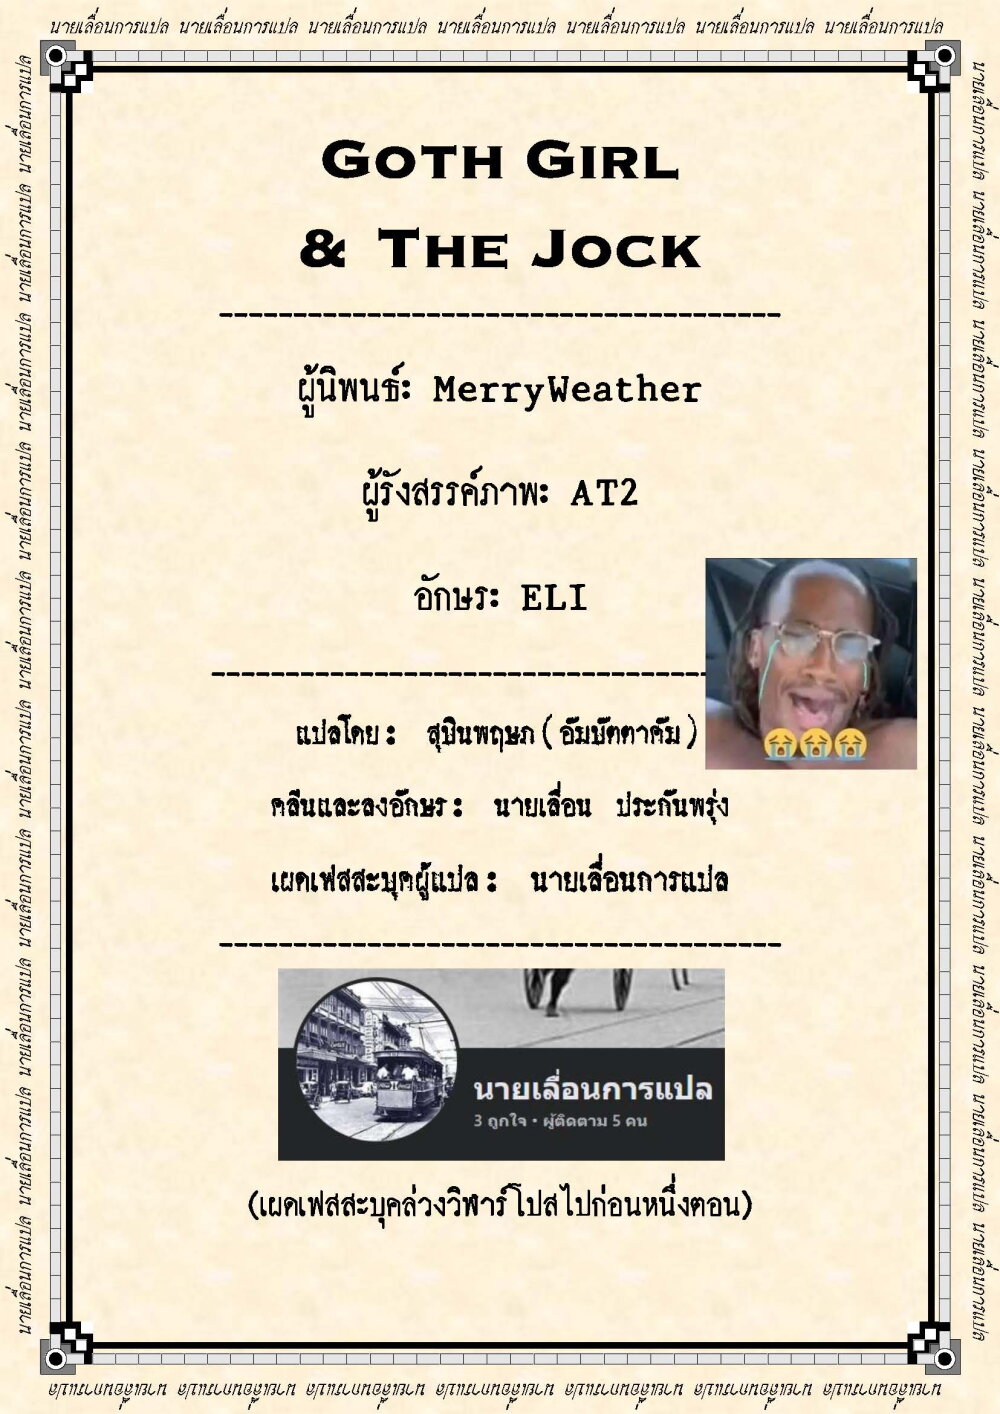 Goth Girl & The Jock 15 9